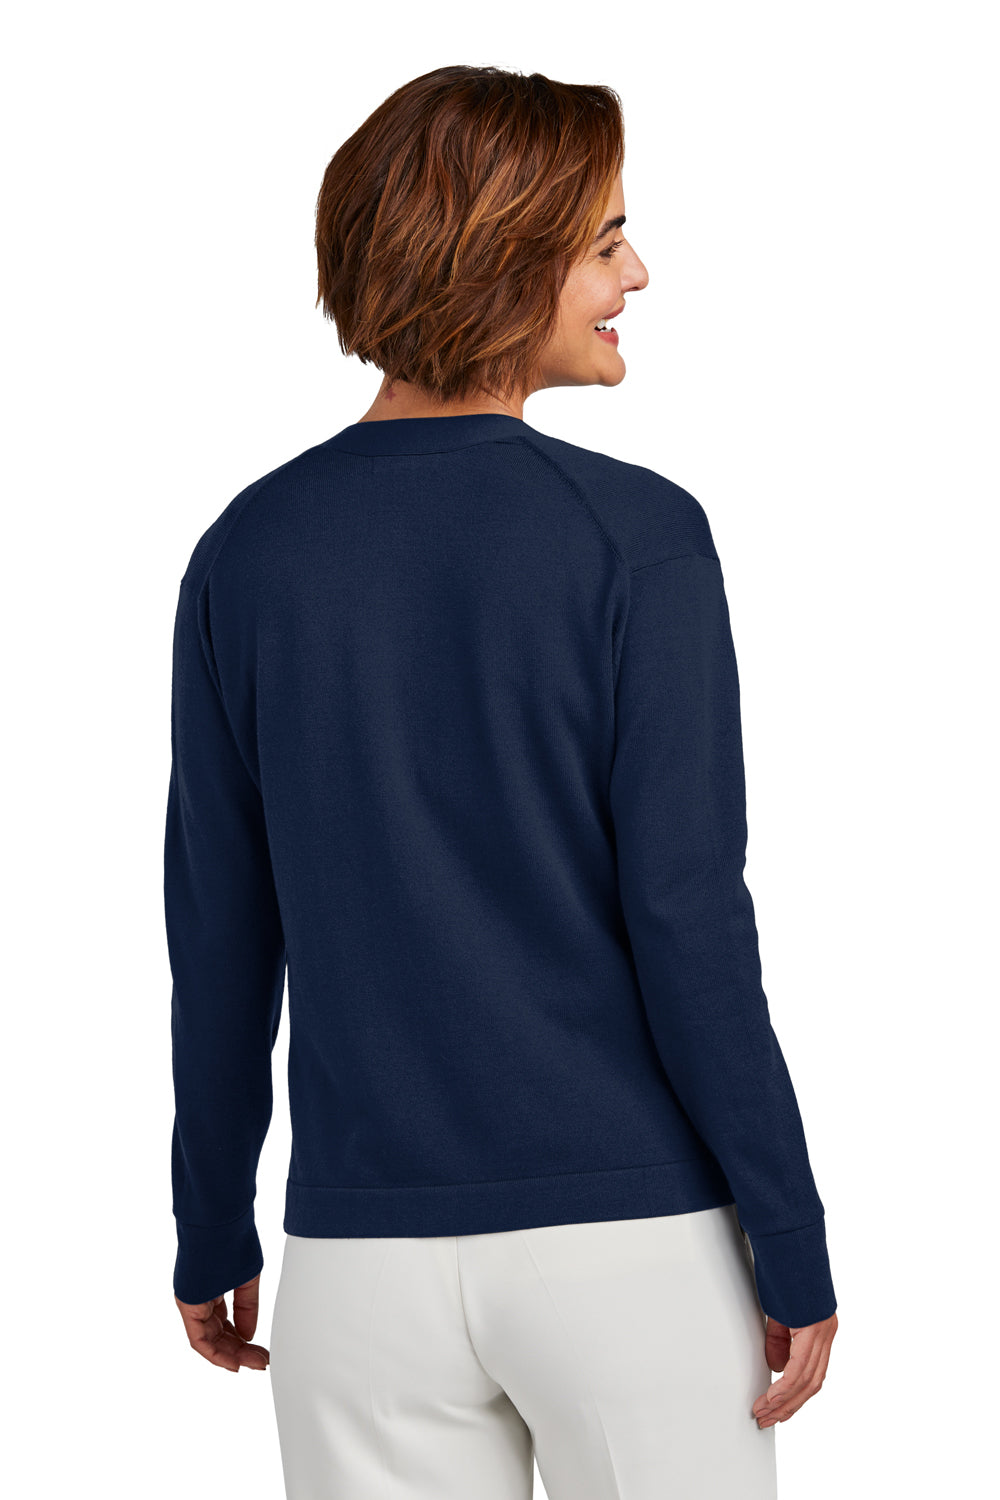 Brooks Brothers Womens Long Sleeeve Cardigan Sweater Navy Blue Model Back